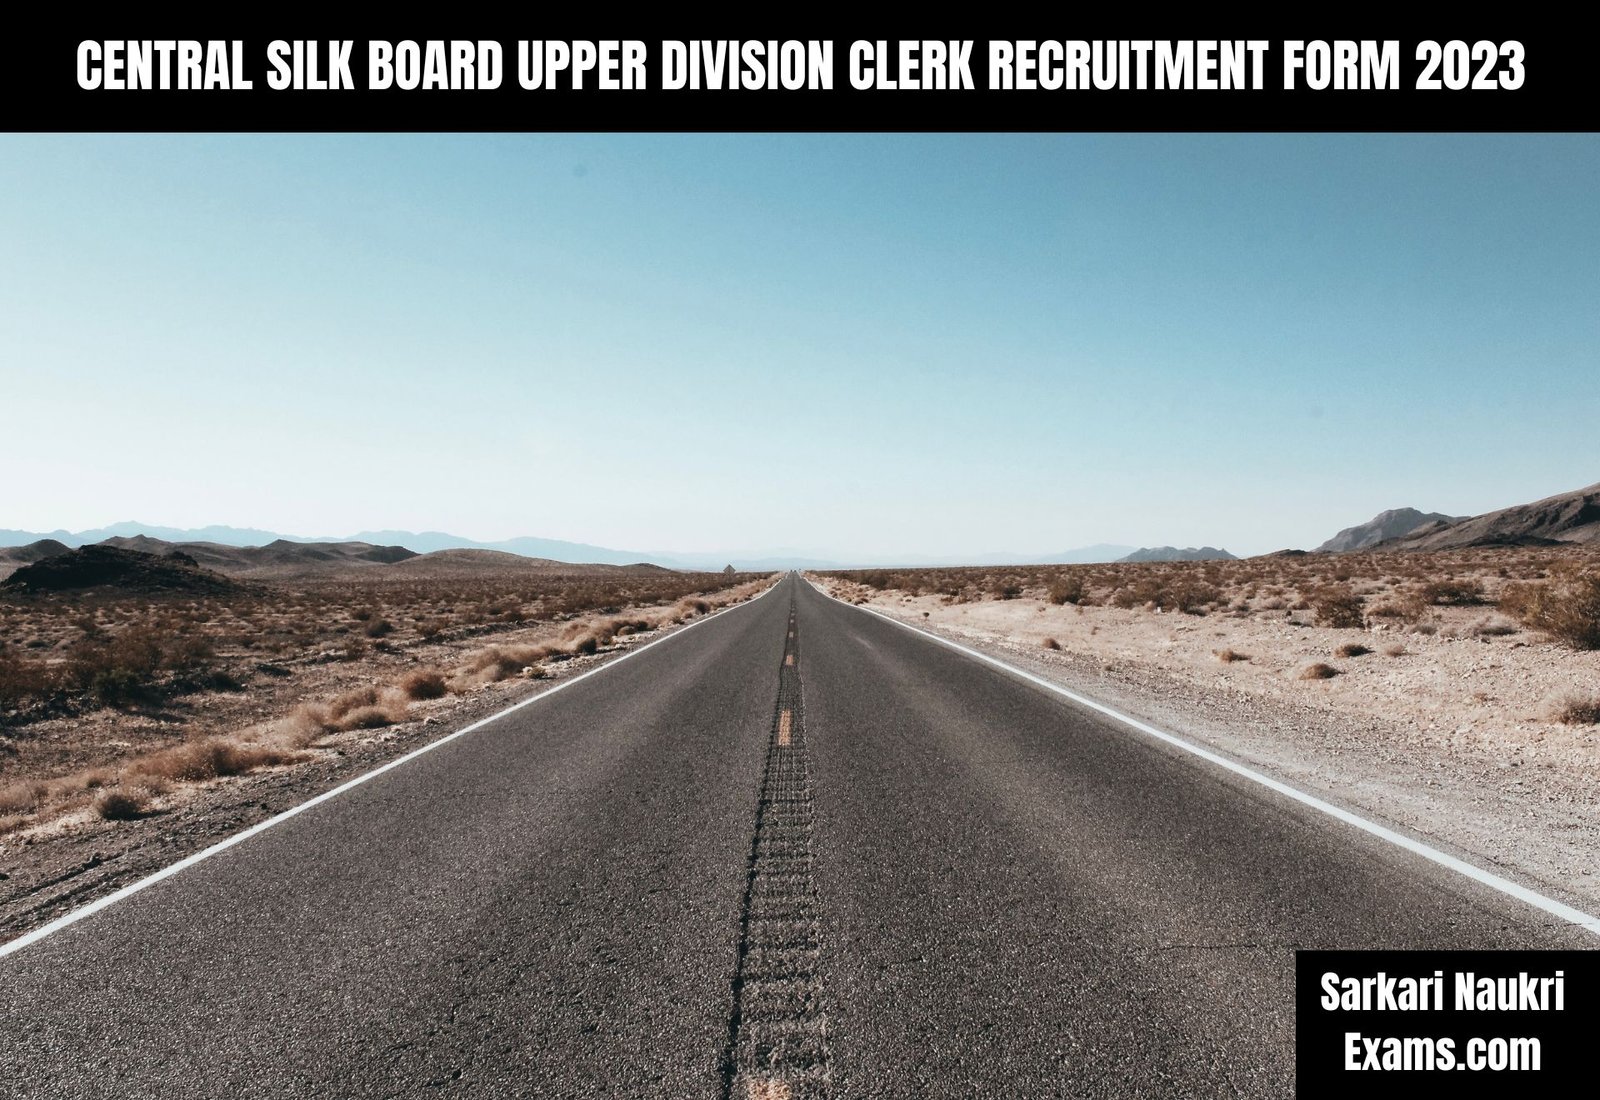 Central Silk Board Upper Division Clerk Recruitment Form 2023